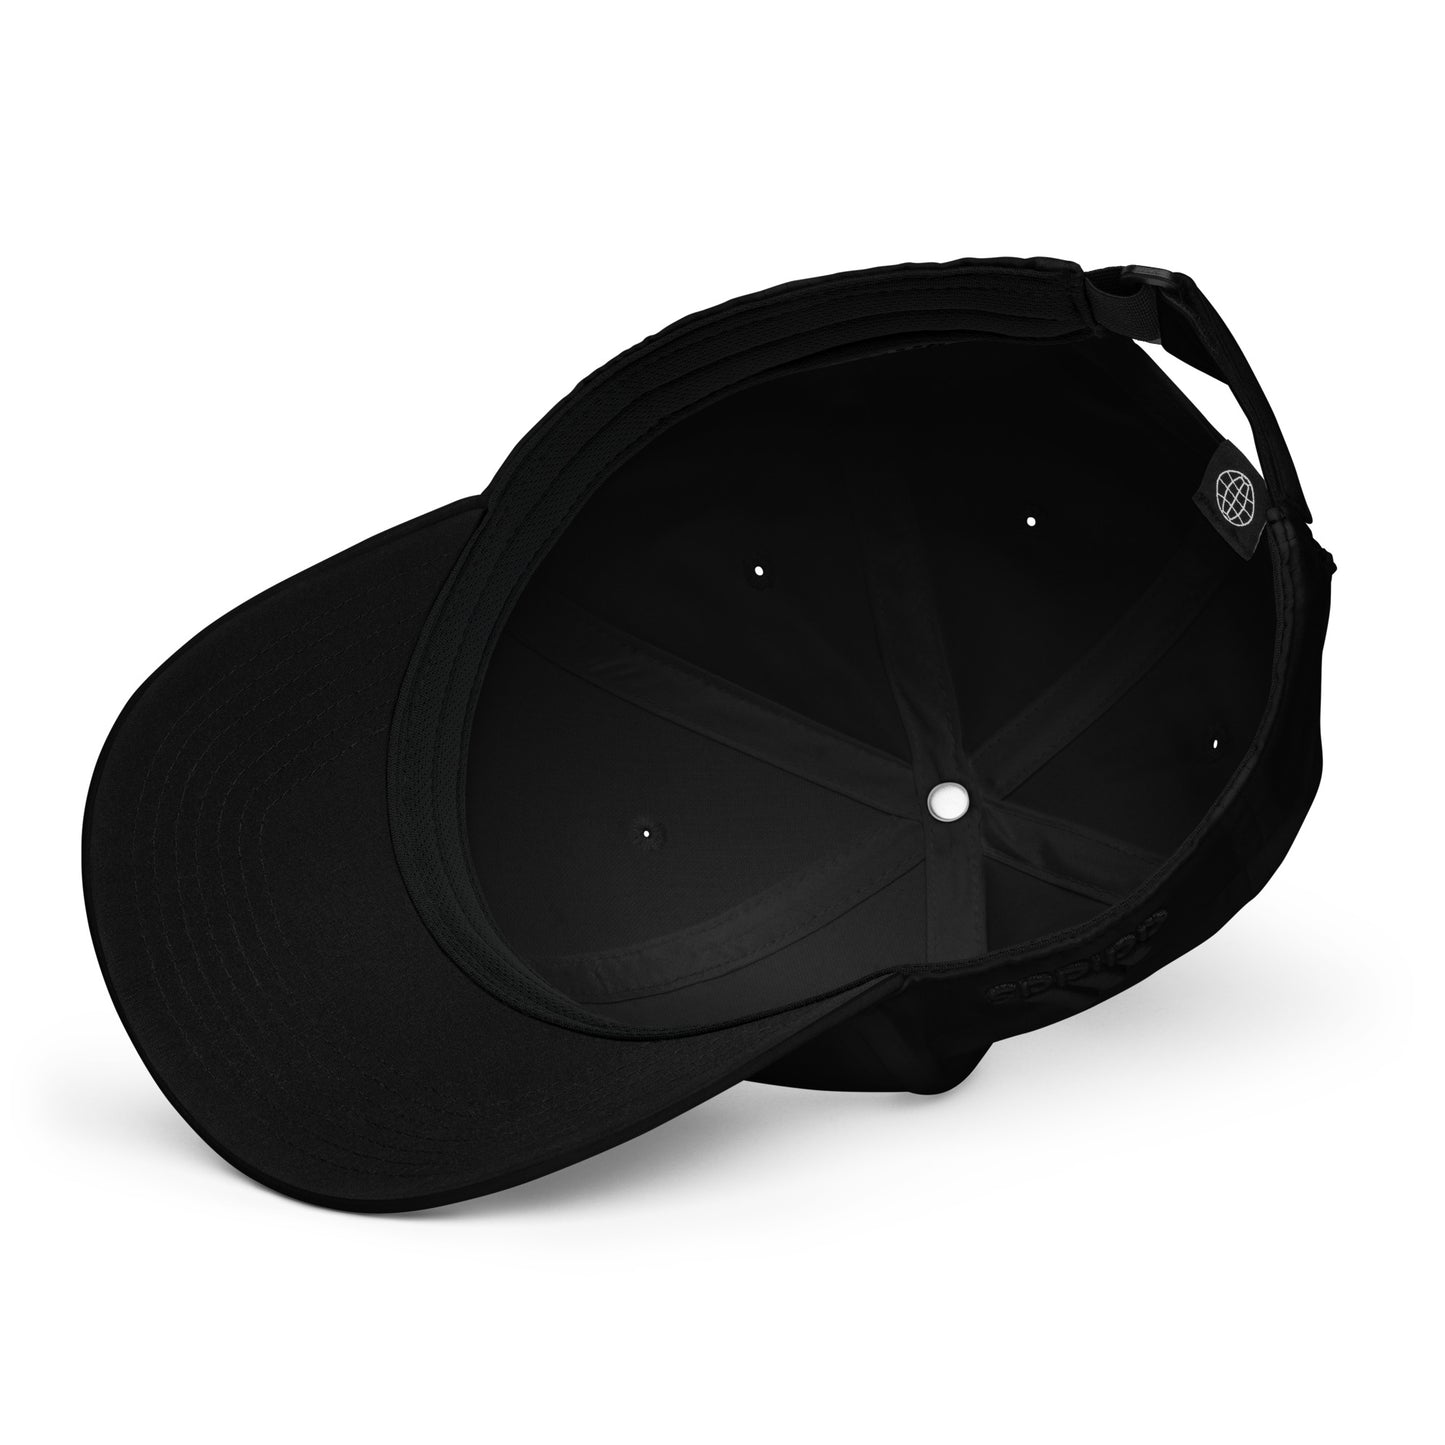 adidas dad hat - U.S. Space Force (in Black)